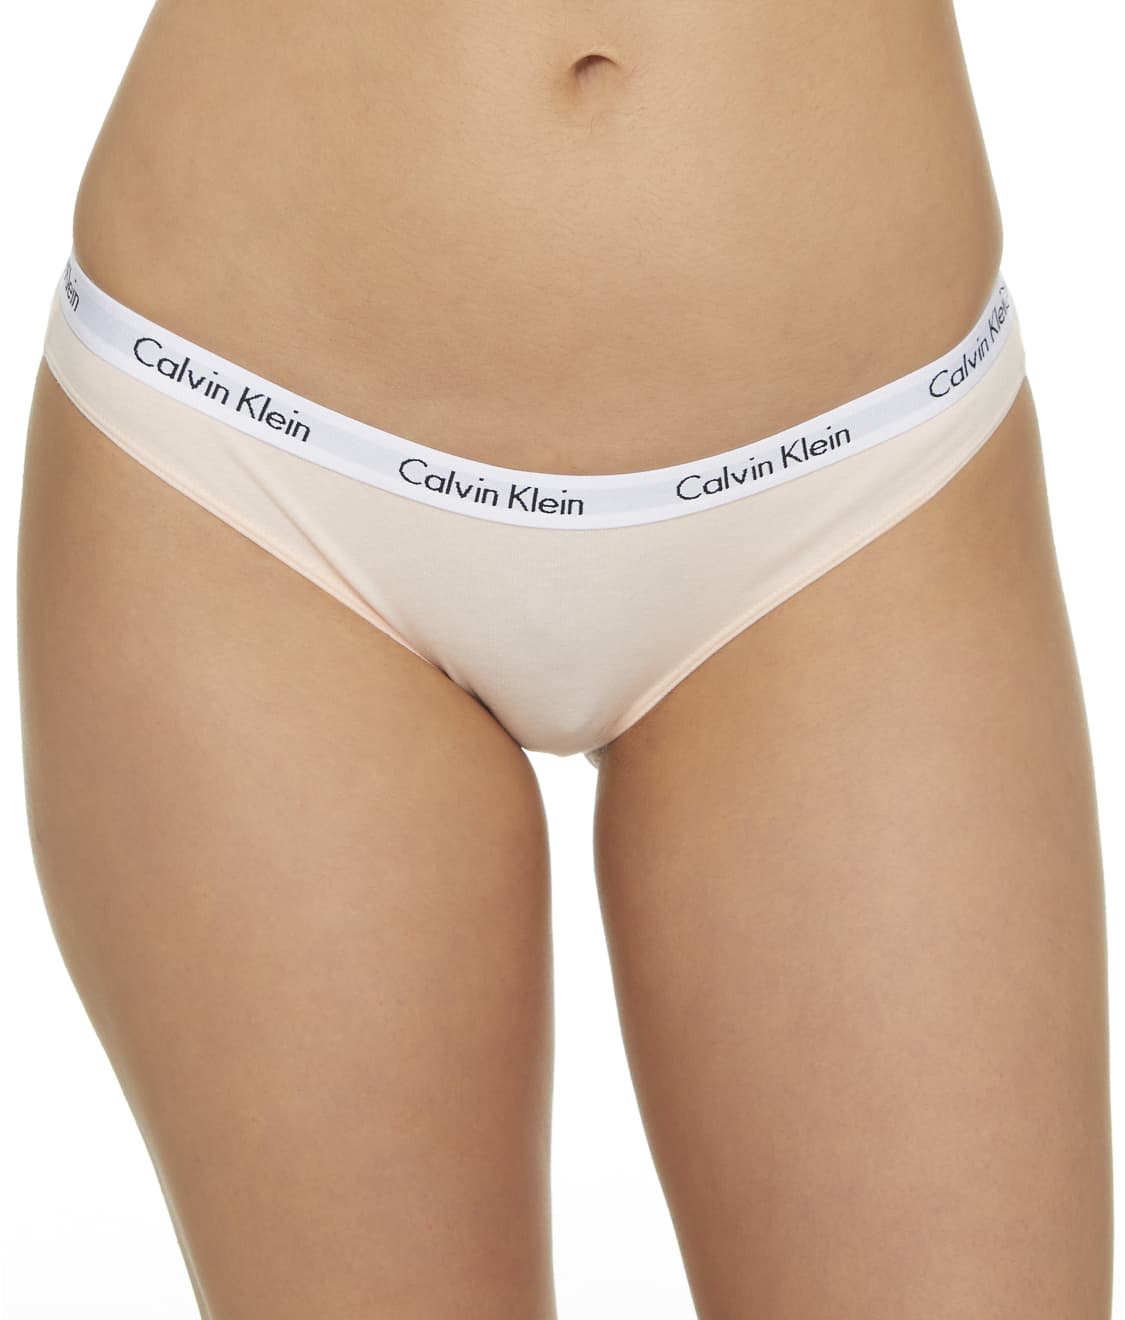 Calvin Klein: Carousel Bikini D1618